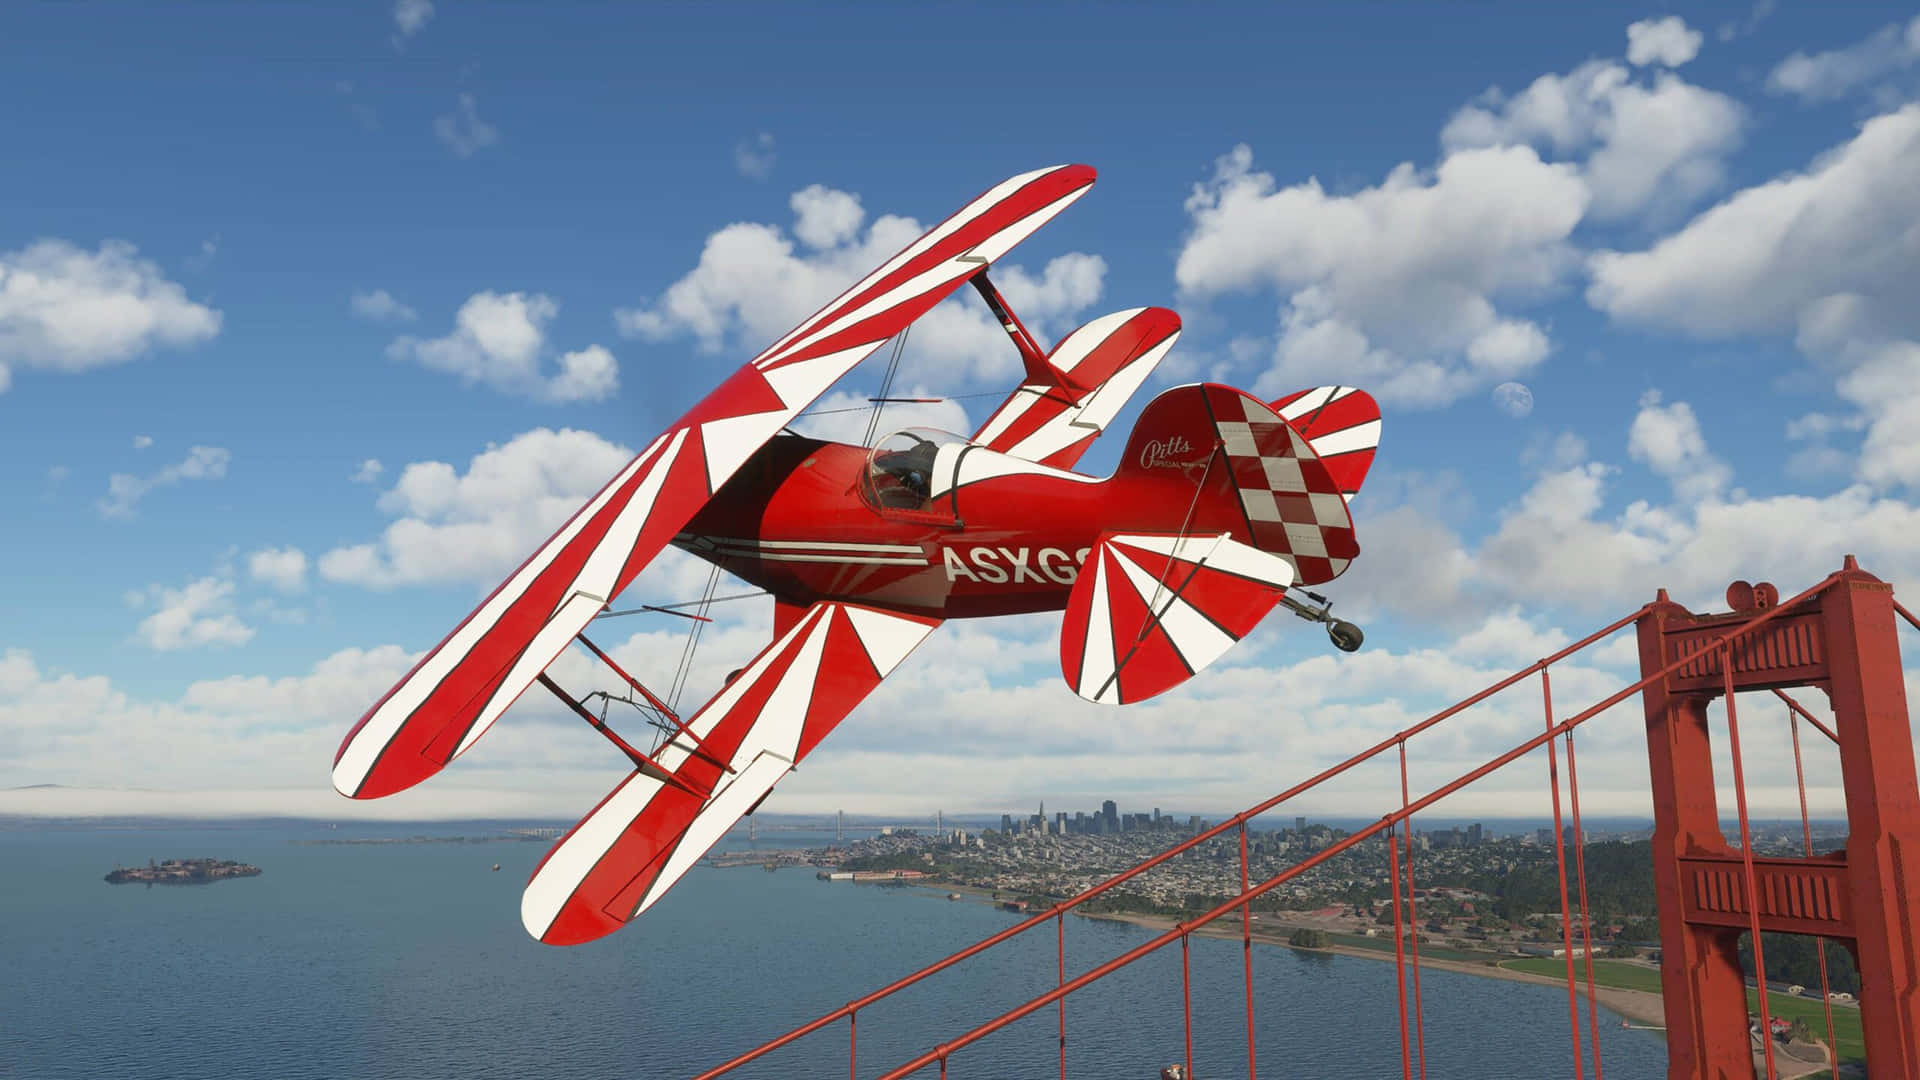 A Biplane Flying Over The Golden Gate Bridge